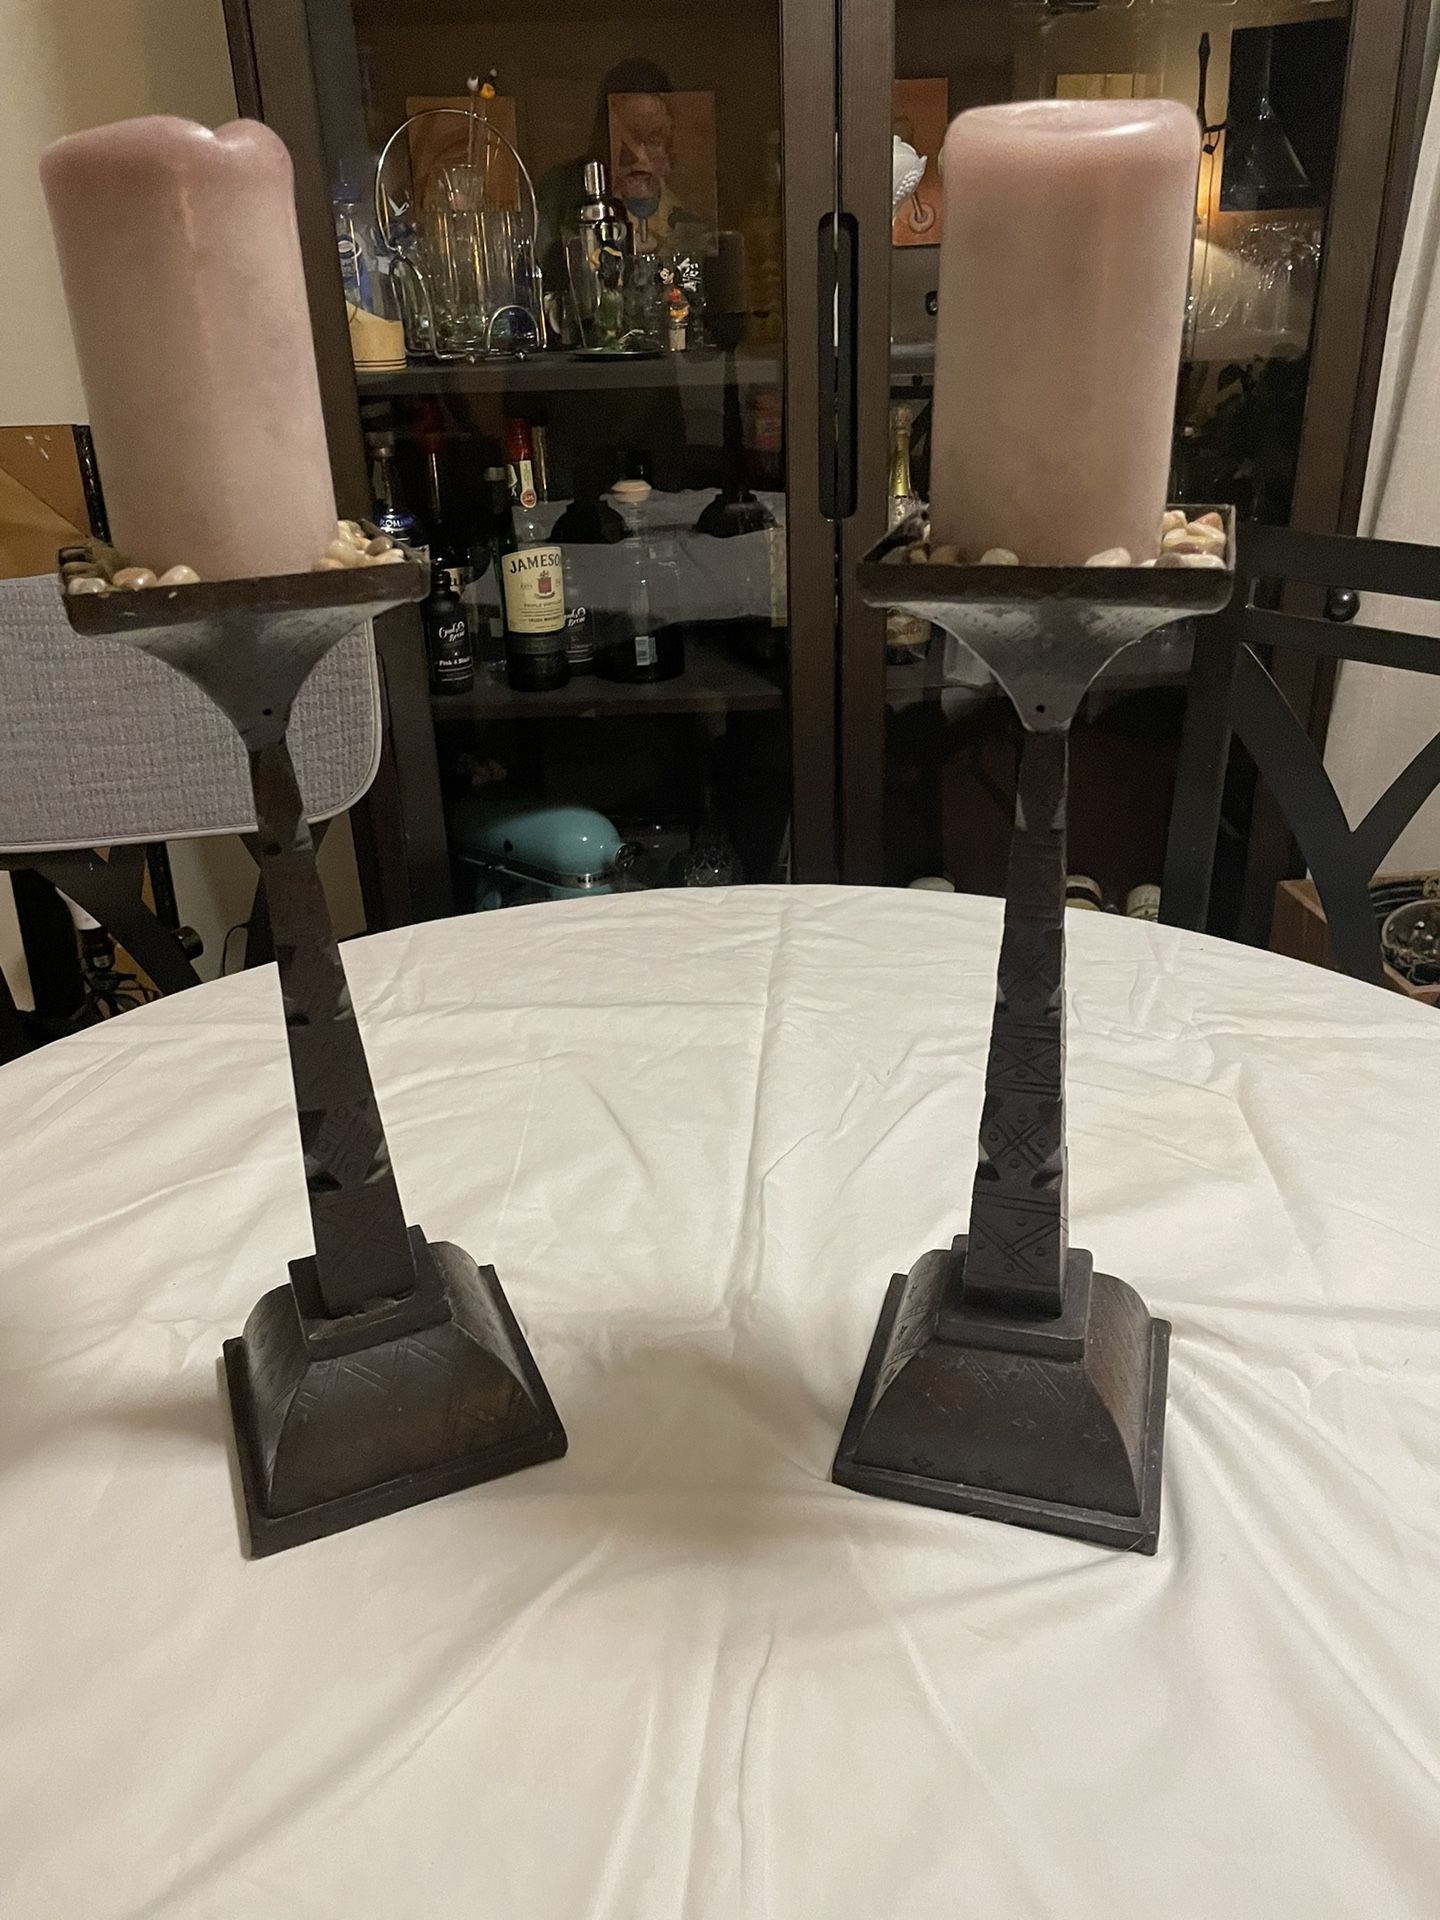 2 Wrought Iron Pillar Candle Holder